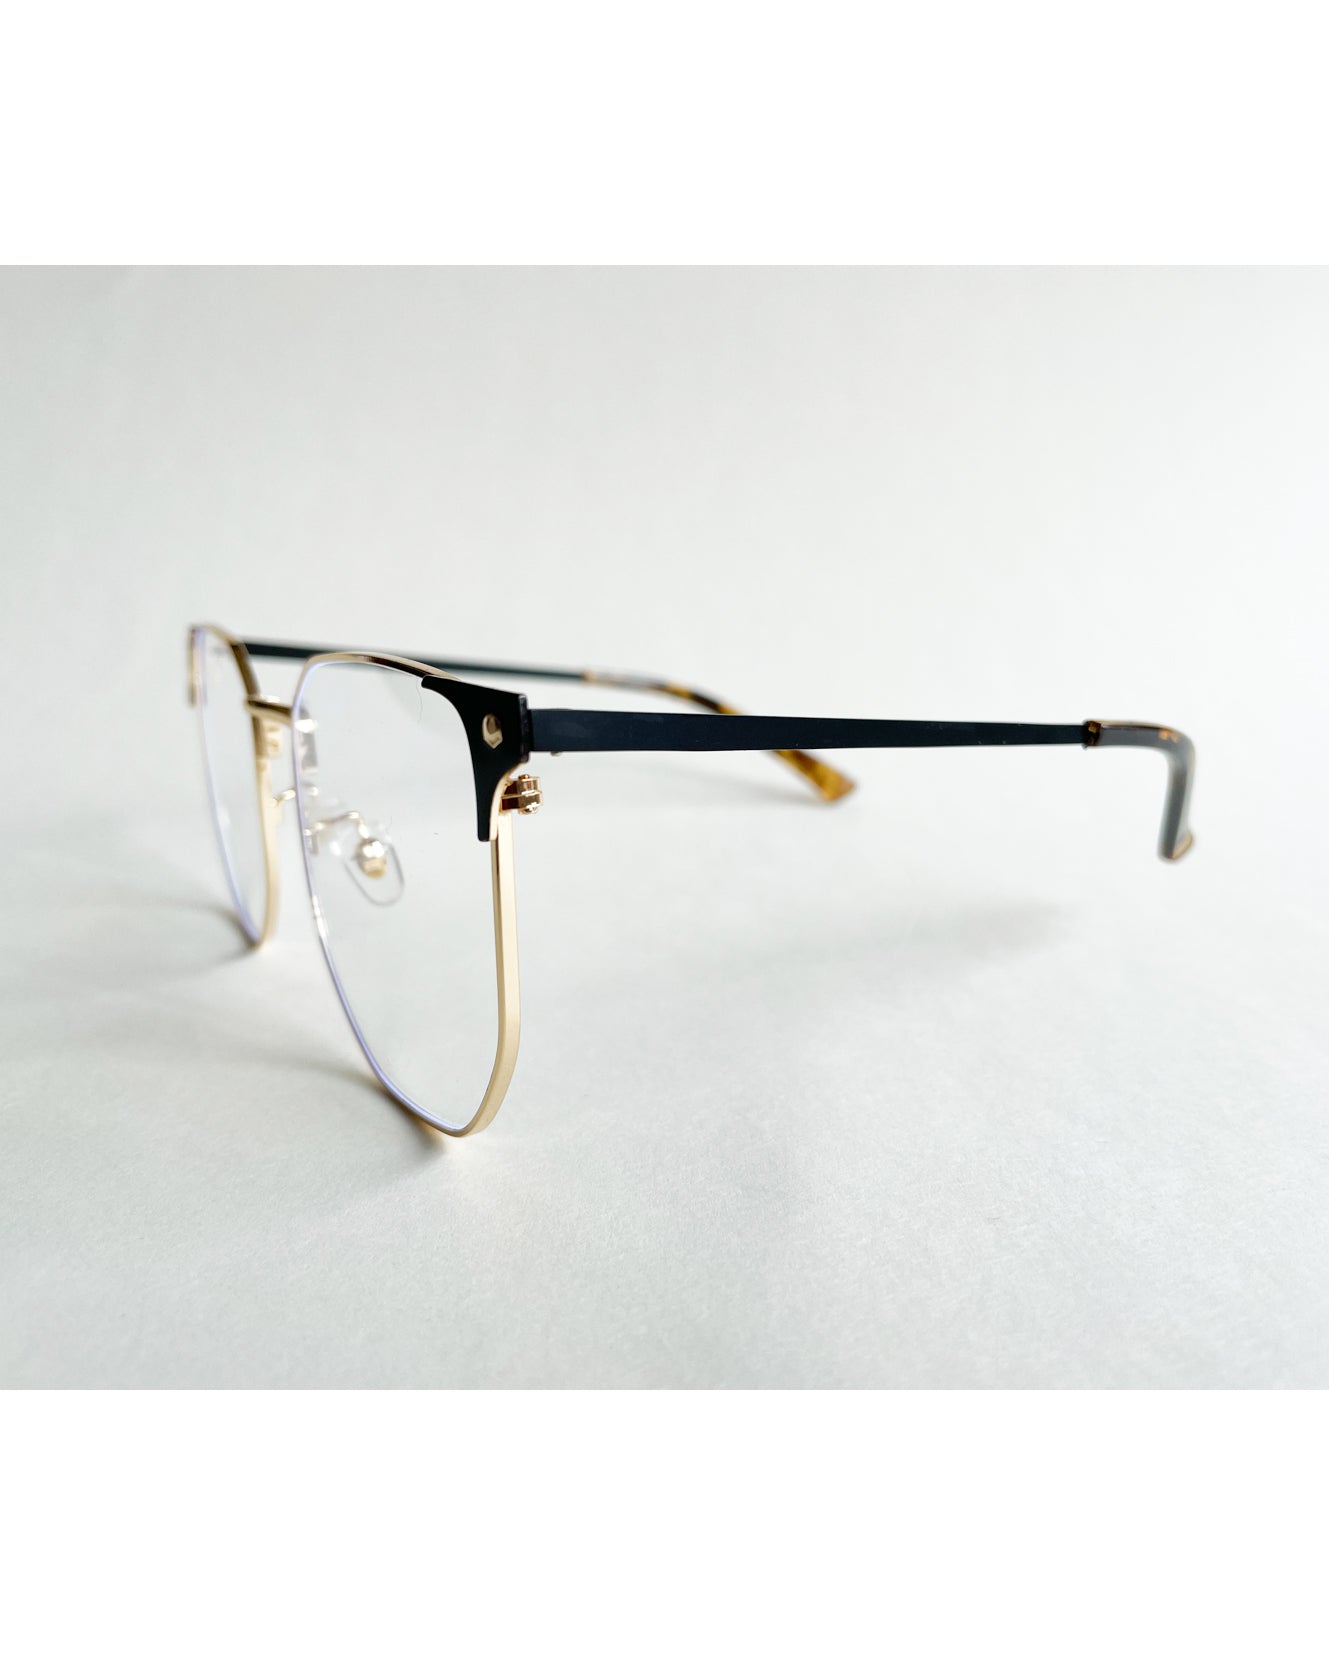 black & gold arms clear lense glasses *pre-order*